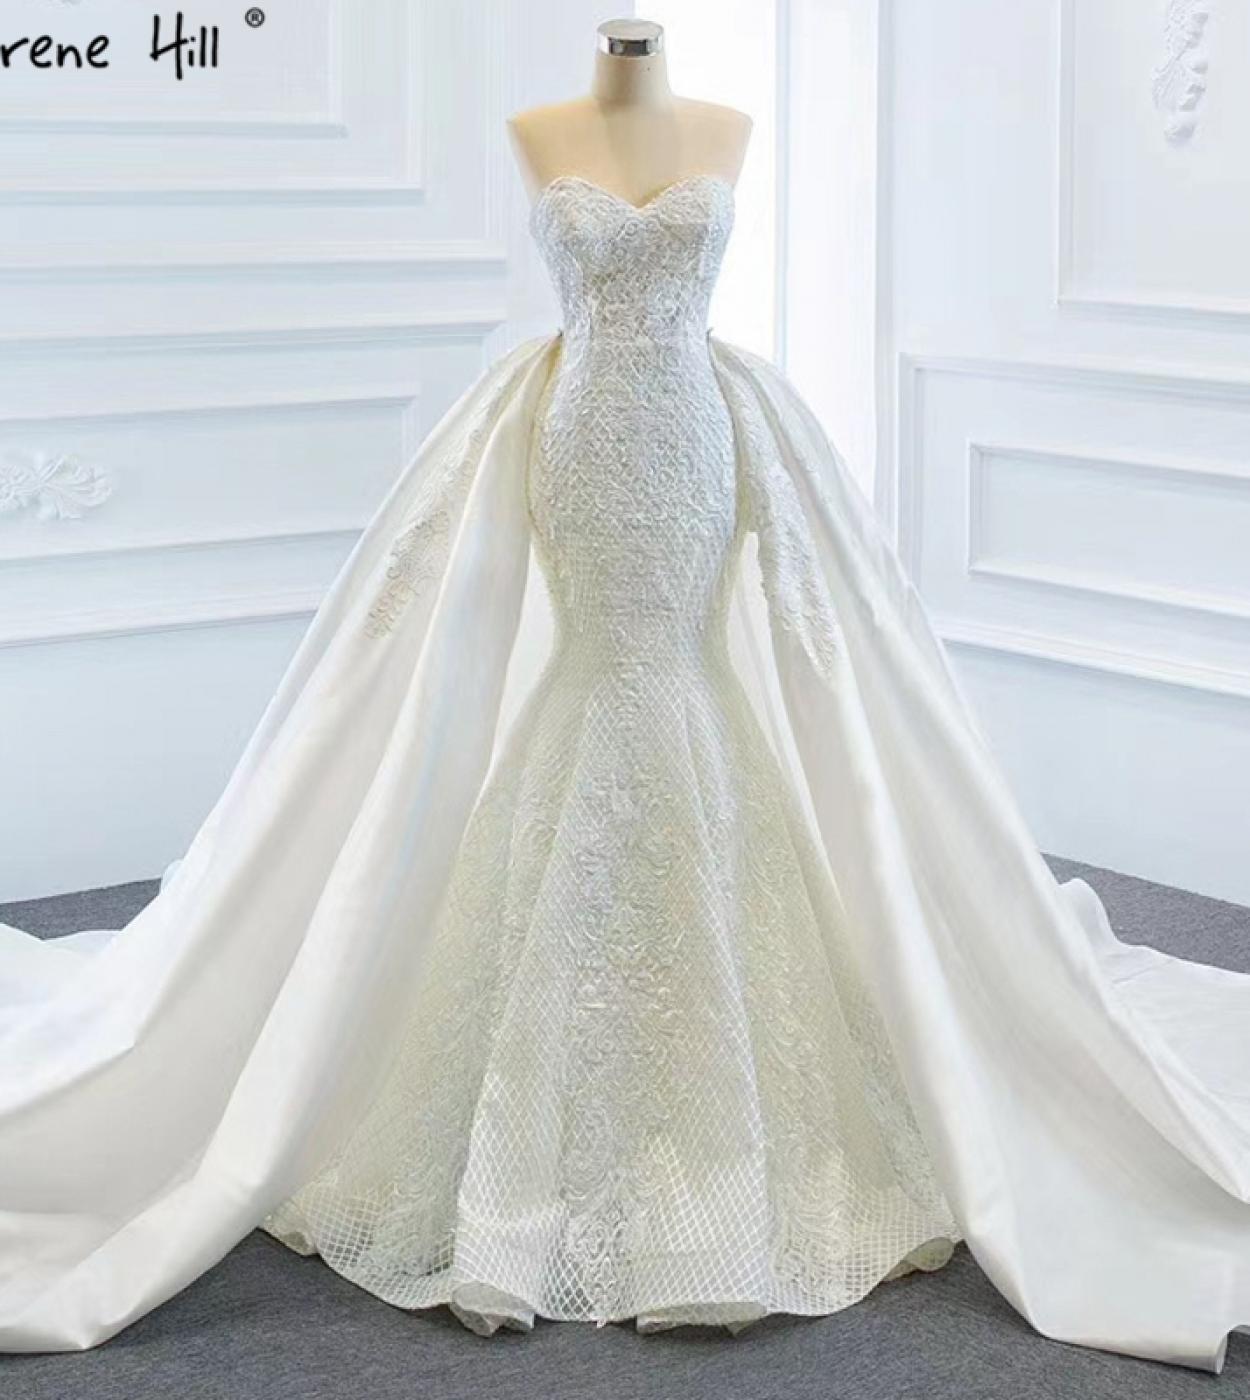 White Mermaid Vintage  Sleeveless Wedding Dresses Highend Off Shoulder Bridal Gown Serene Hill Hm66660 Custom Made  Wedd